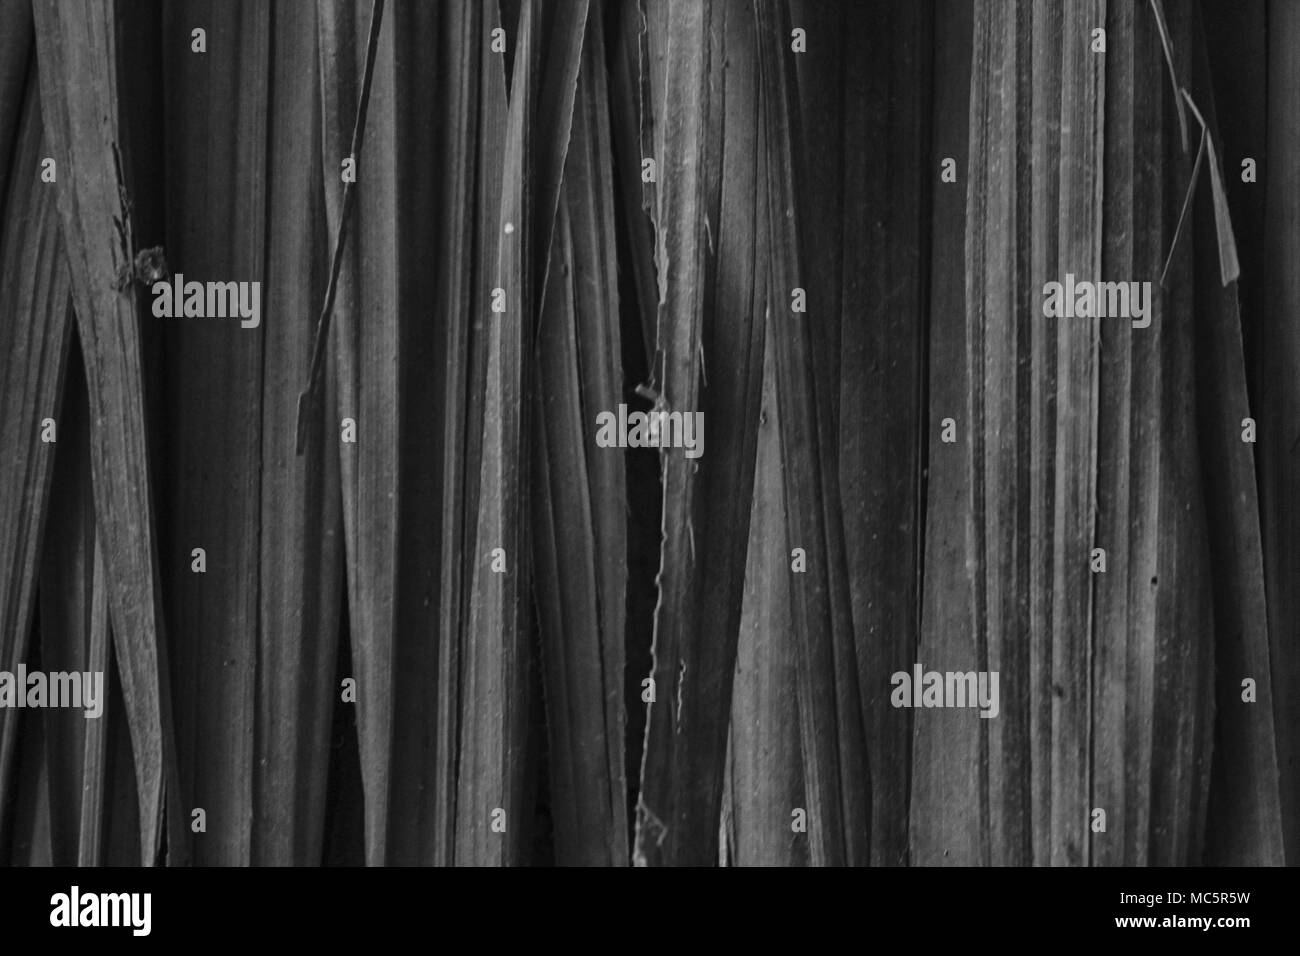 Monochrome Bambus wand Textur Hintergrund. Holz- Textur Stockfoto